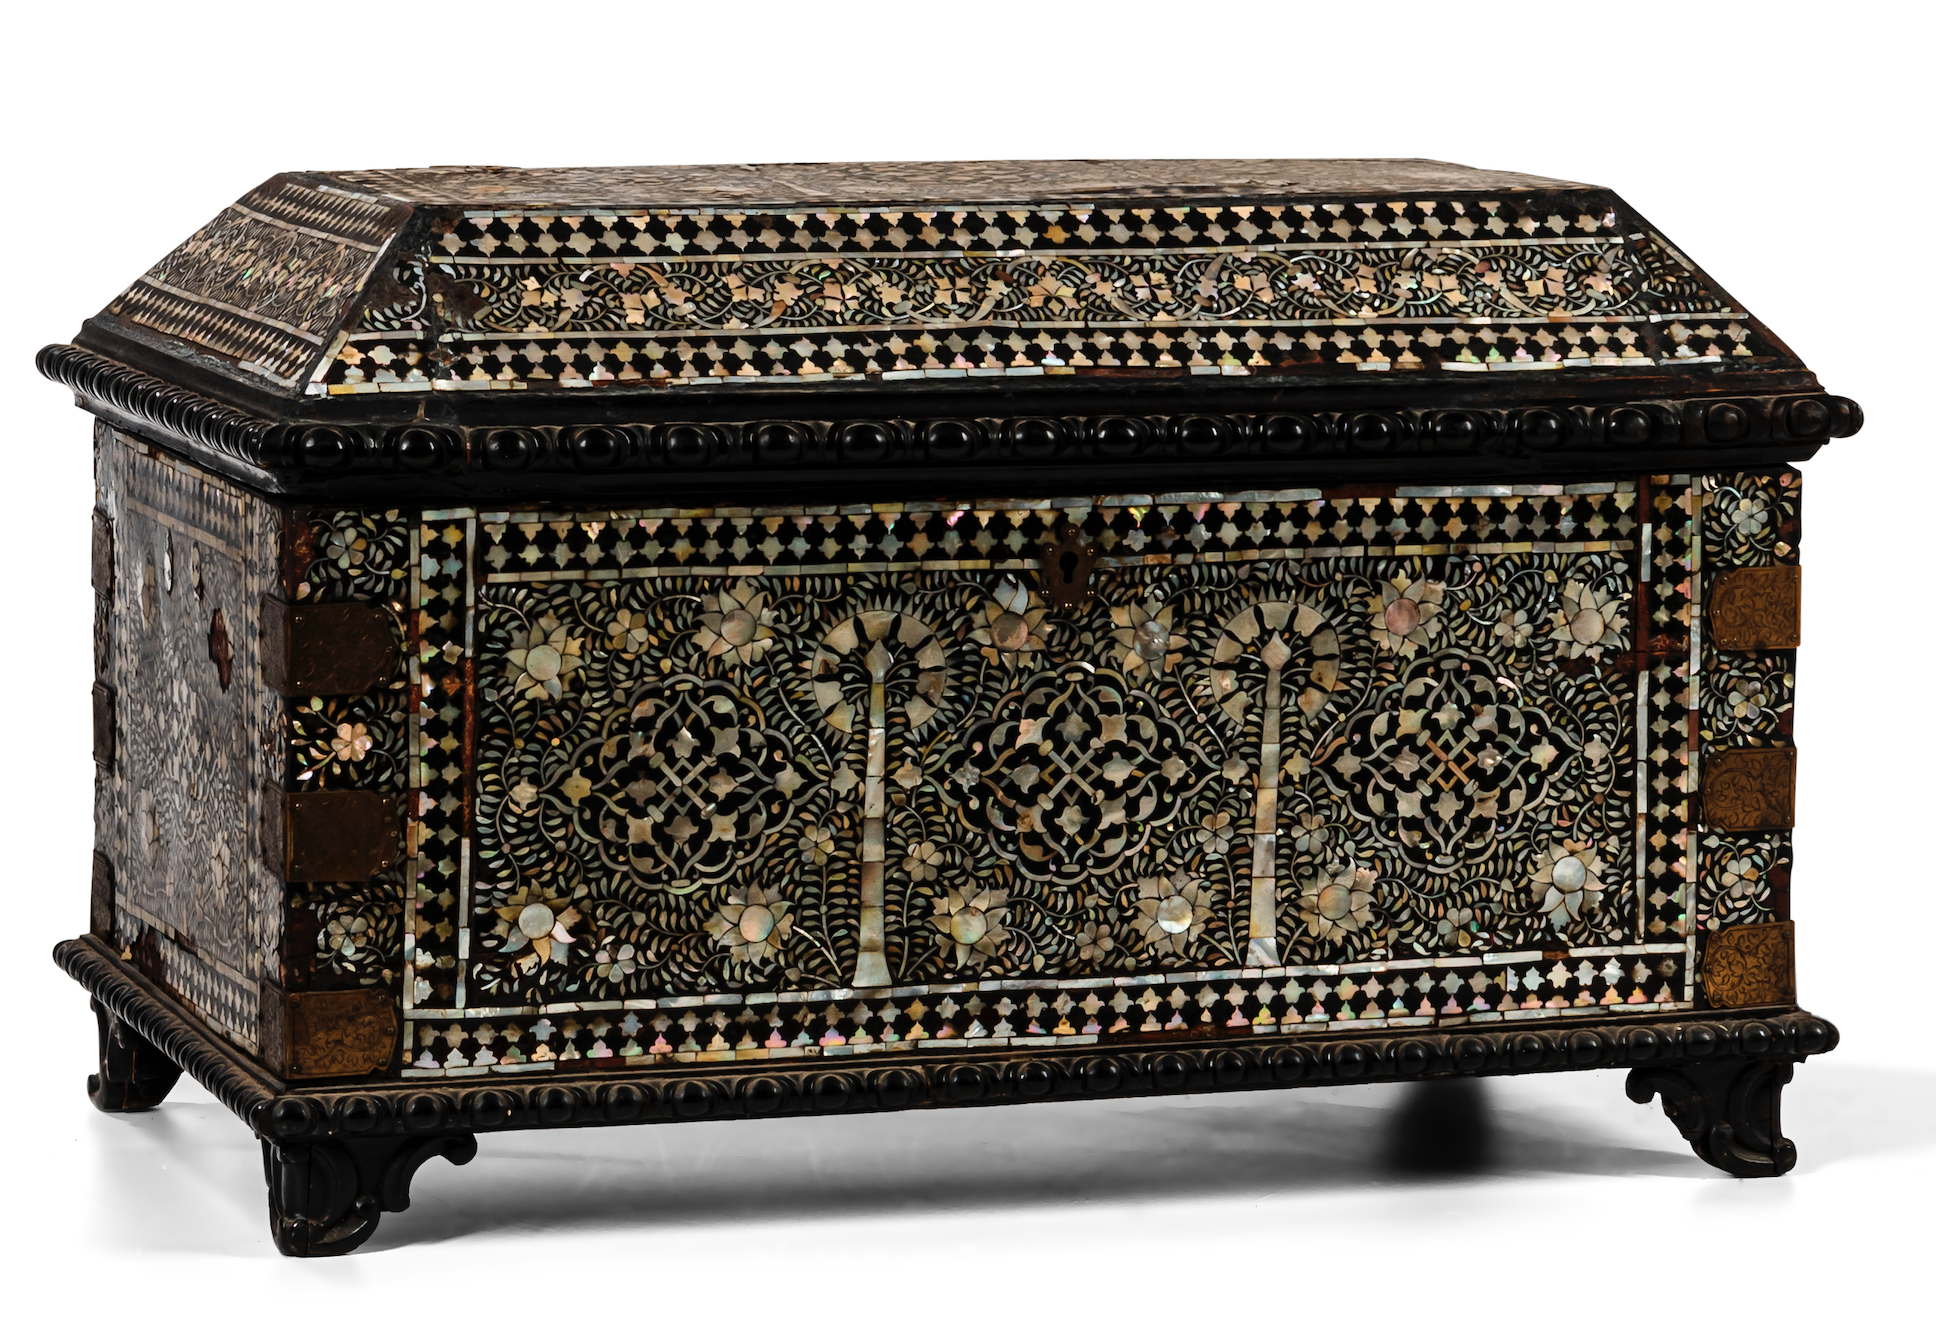 Indian mother-of-pearl inlaid wood casket, $237,500. Image courtesy of Bonhams Skinner